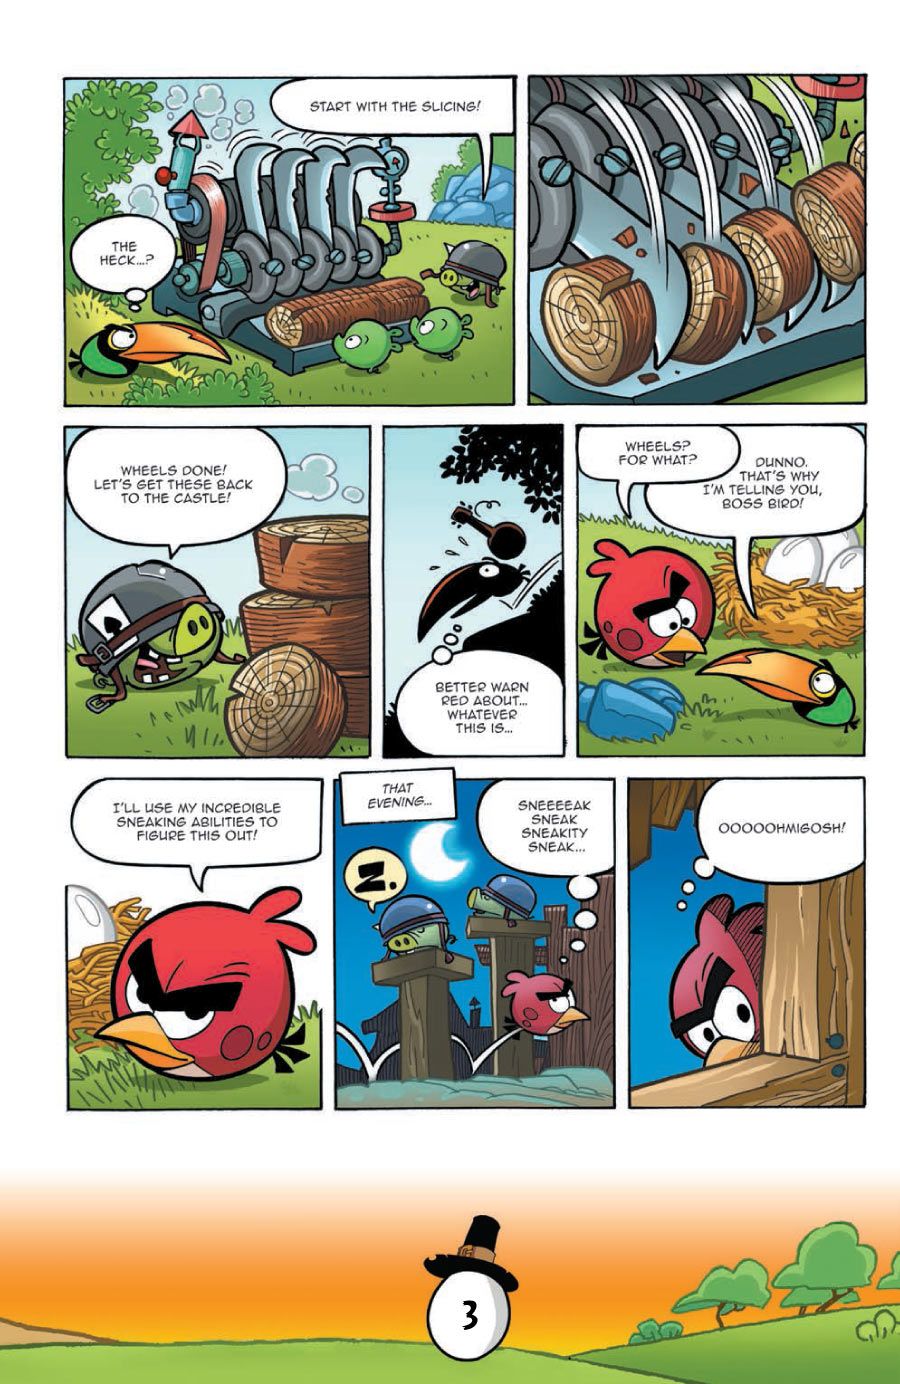 angrybirds_comics_11-pr-5